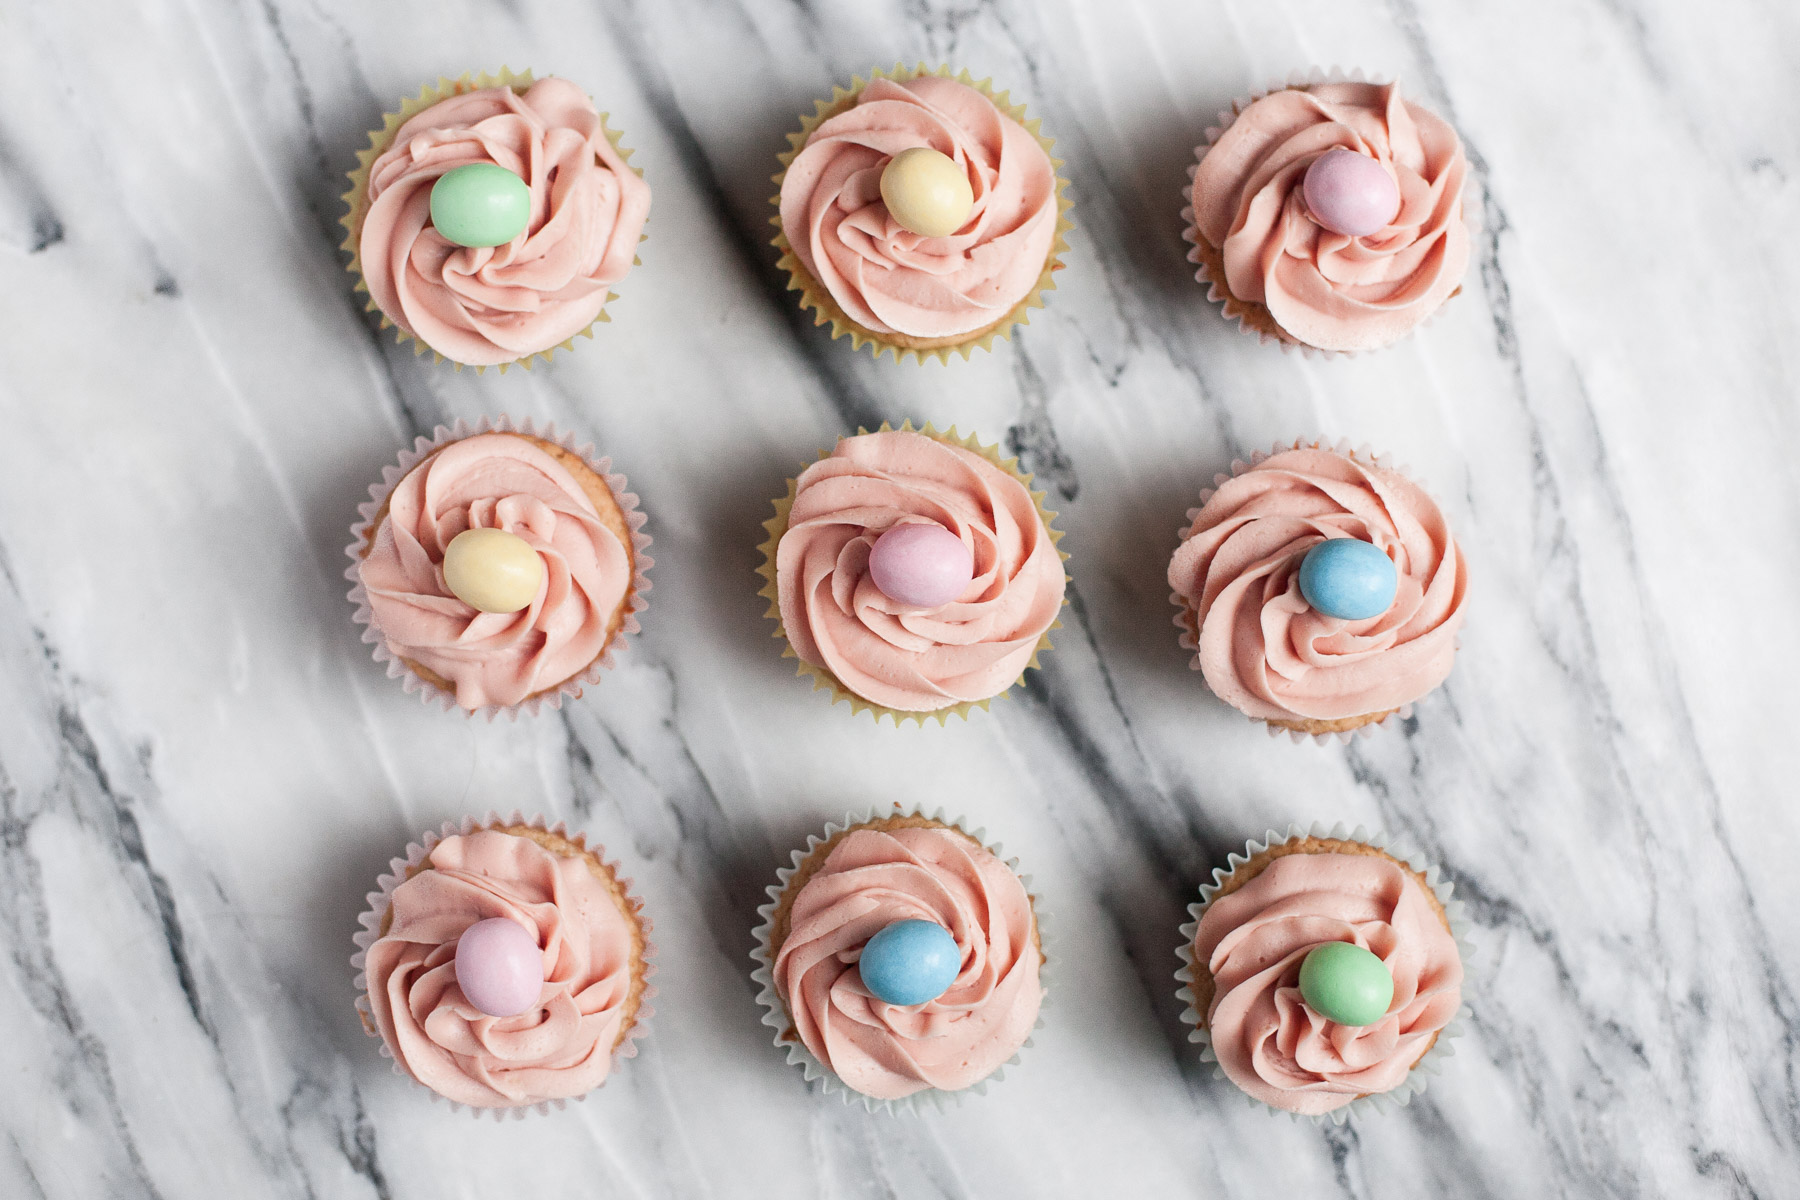 Easy Gluten-free Vanilla Cupcakes | acalculatedwhisk.com